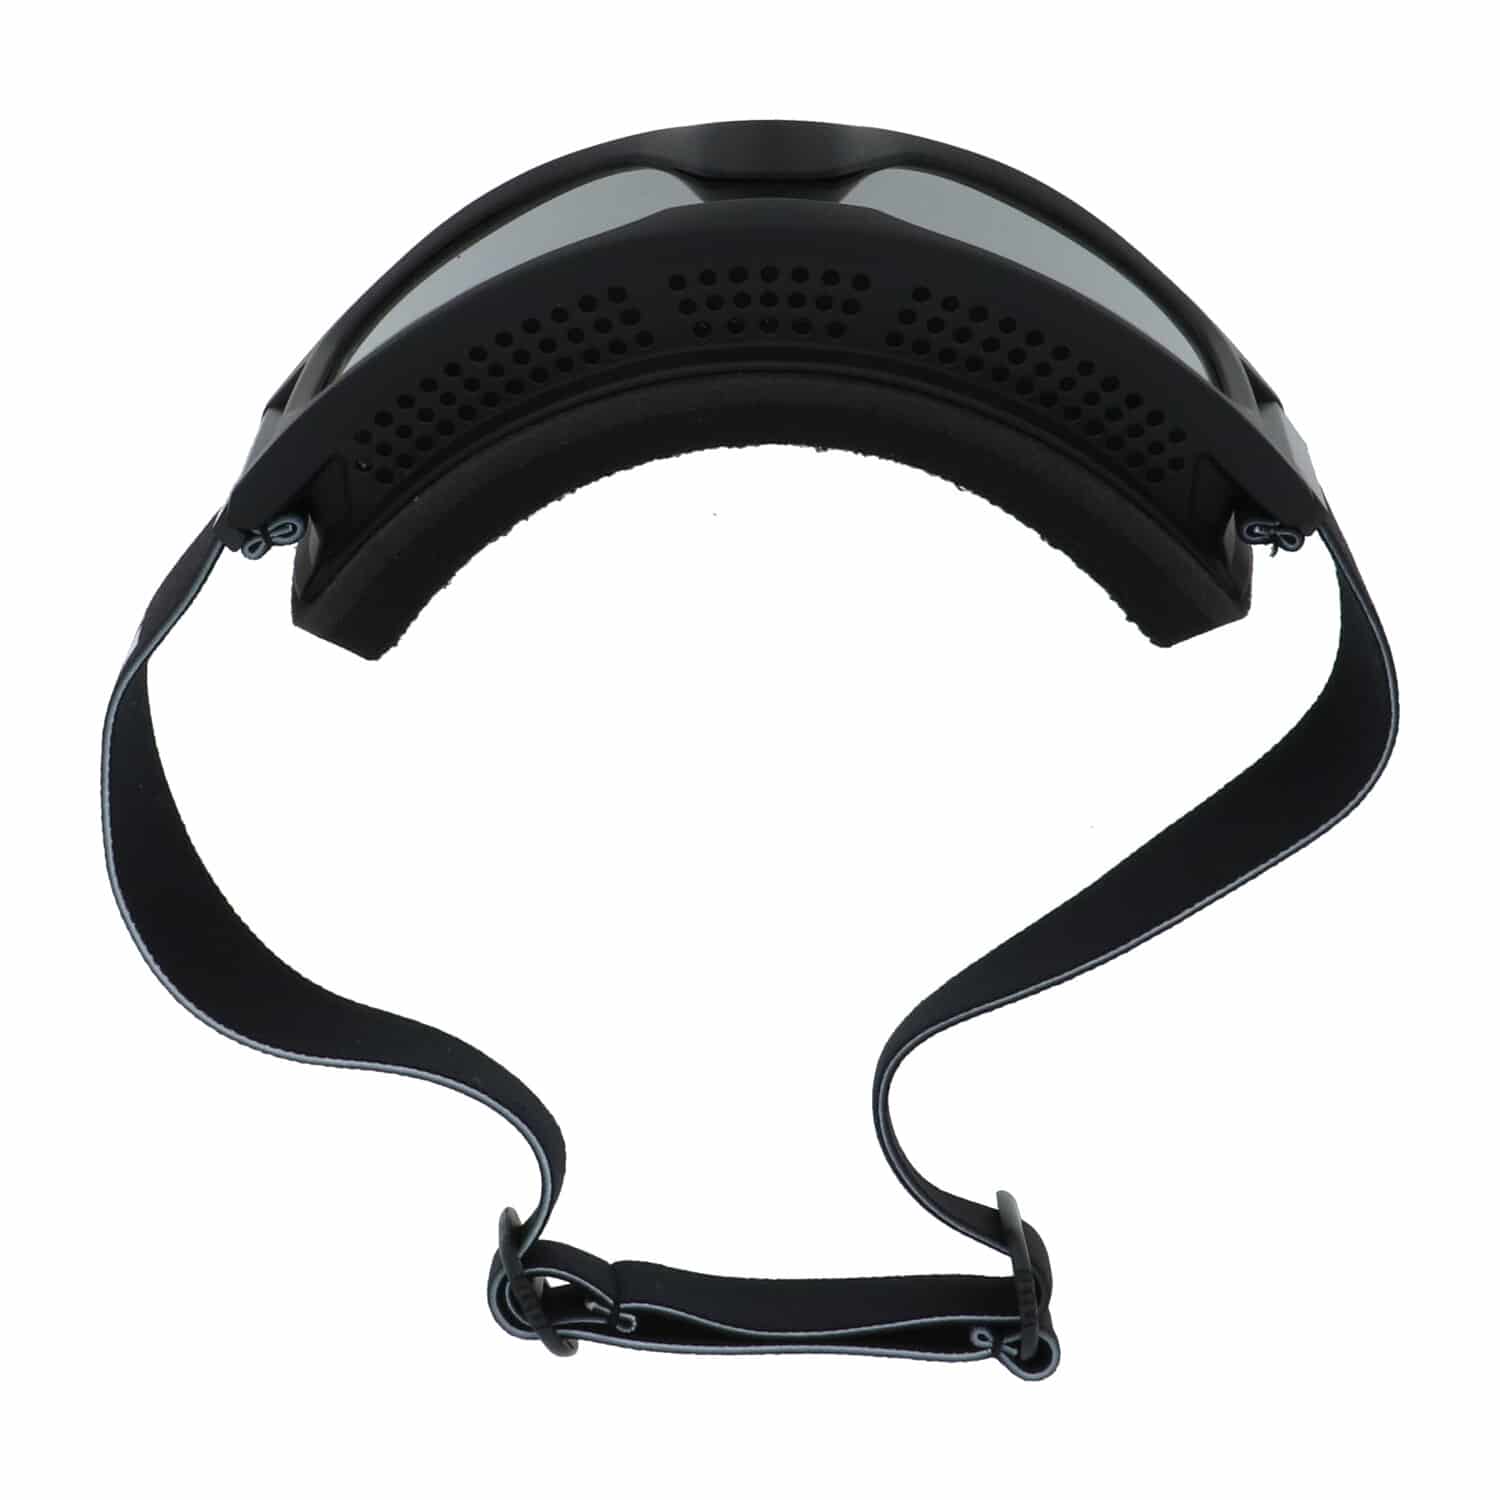 5one® Alpine 4 Black Skibril voor Dames met bewaarcase - UV 400